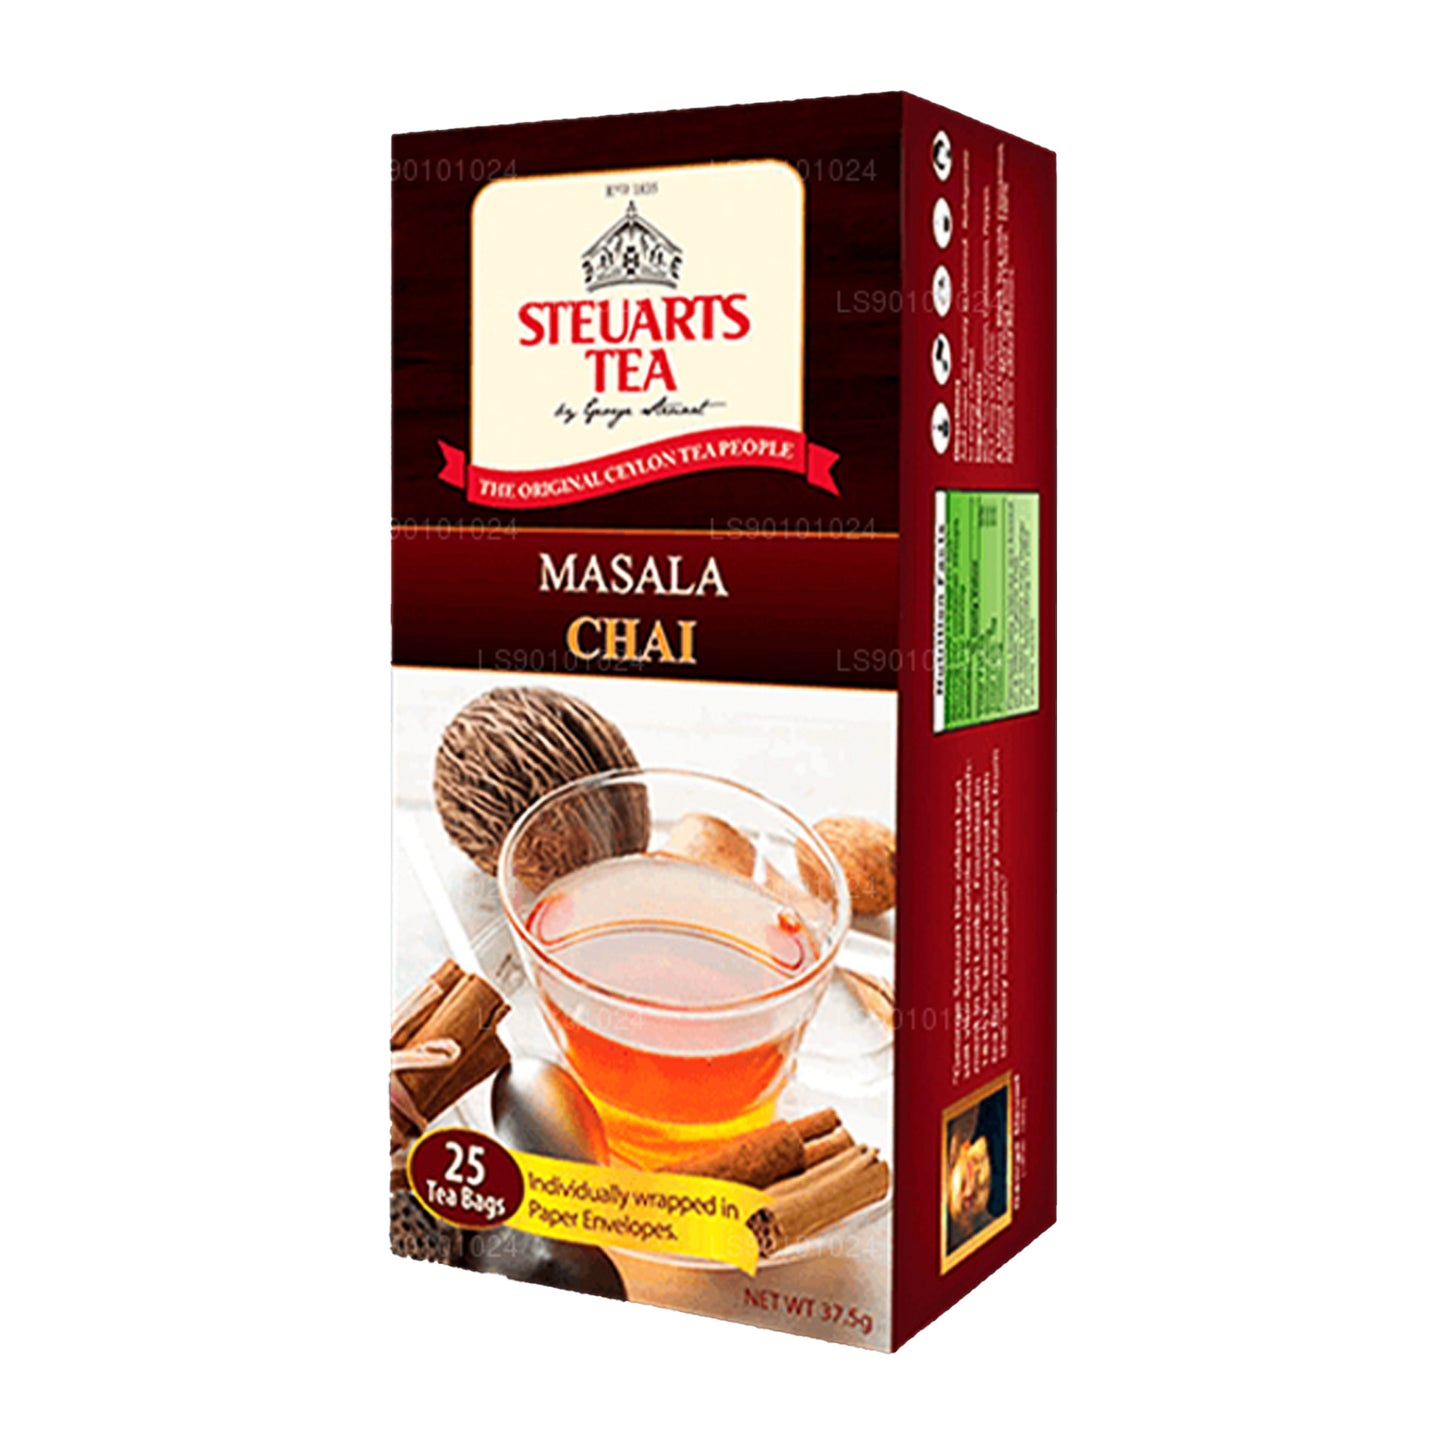 George Steuart Masala Chai Tea (50g) 25 bustine di tè